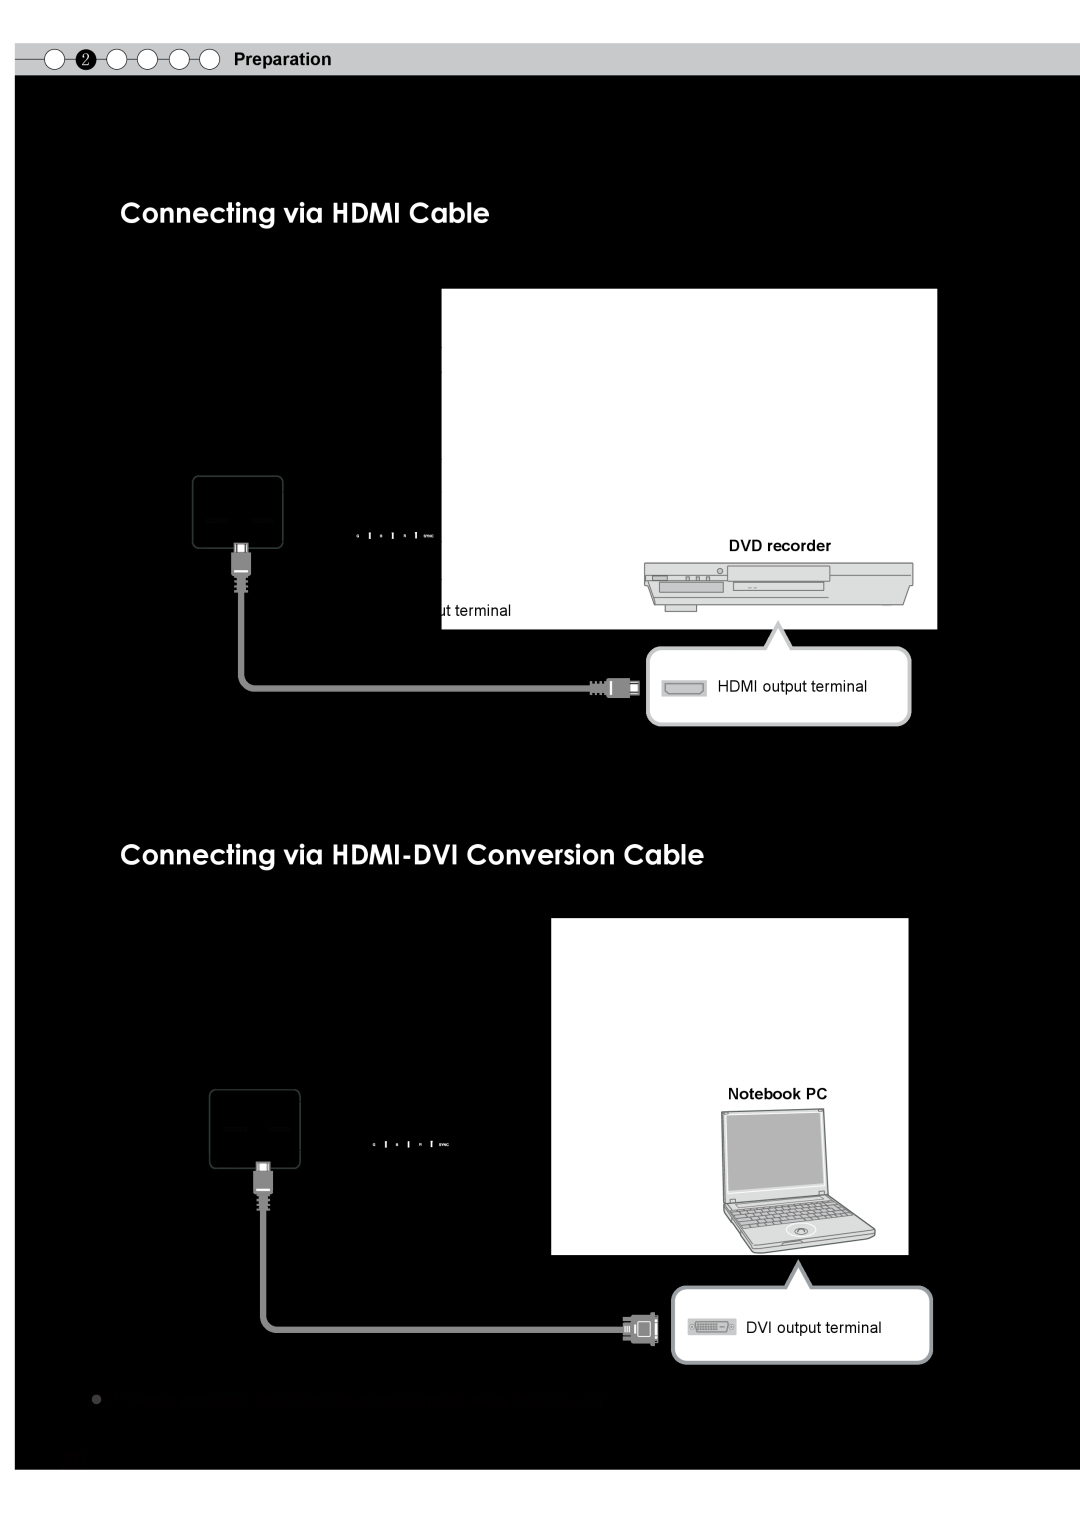 JVC PB006596599-0 ConnectingContinued, Connecting via HDMI Cable, Connecting via HDMI-DVI Conversion Cable, Preparation 